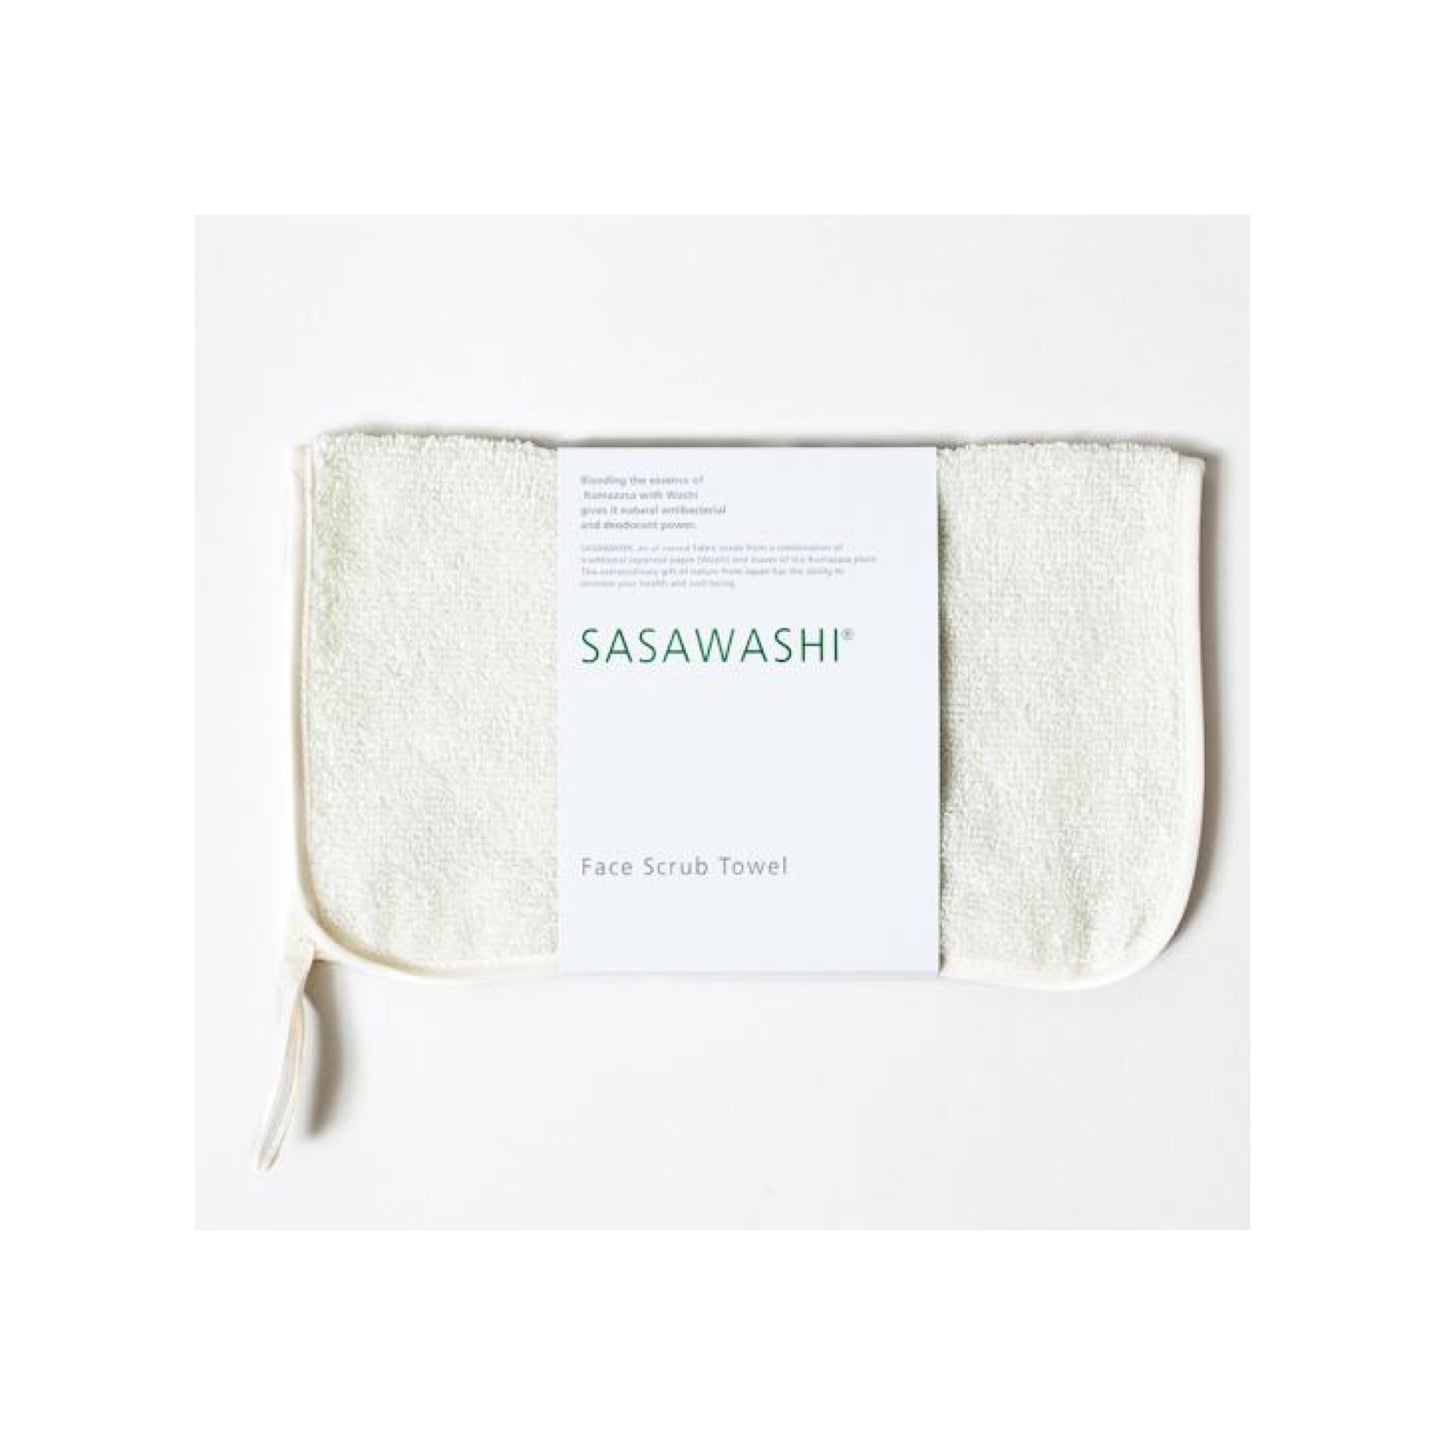 sasawashi face scrub towel